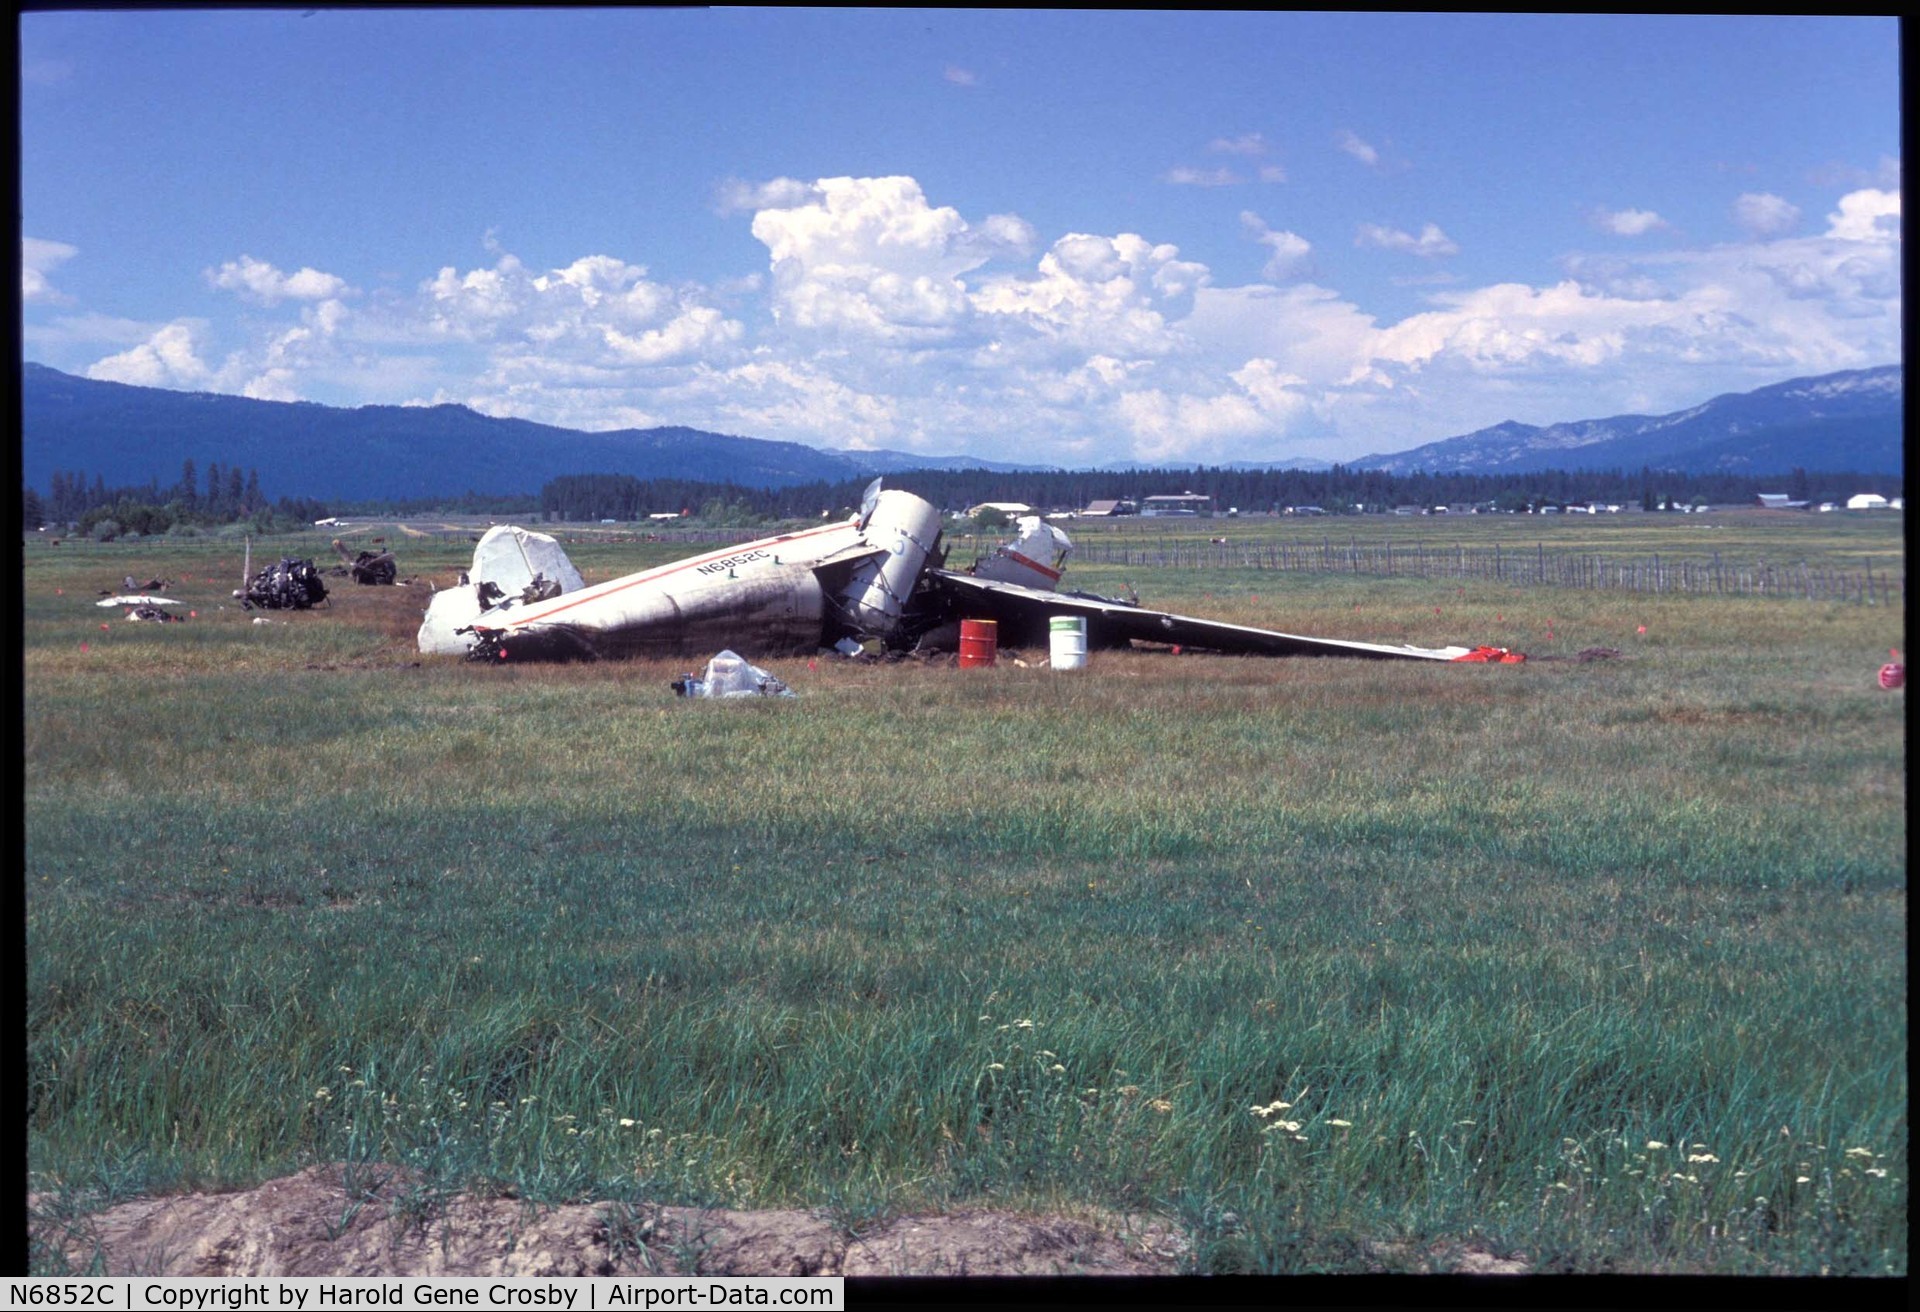 N6852C, Lockheed PV-2 Harpoon C/N 15-1456, Crashed in Idaho Backcounty. Could be McCall